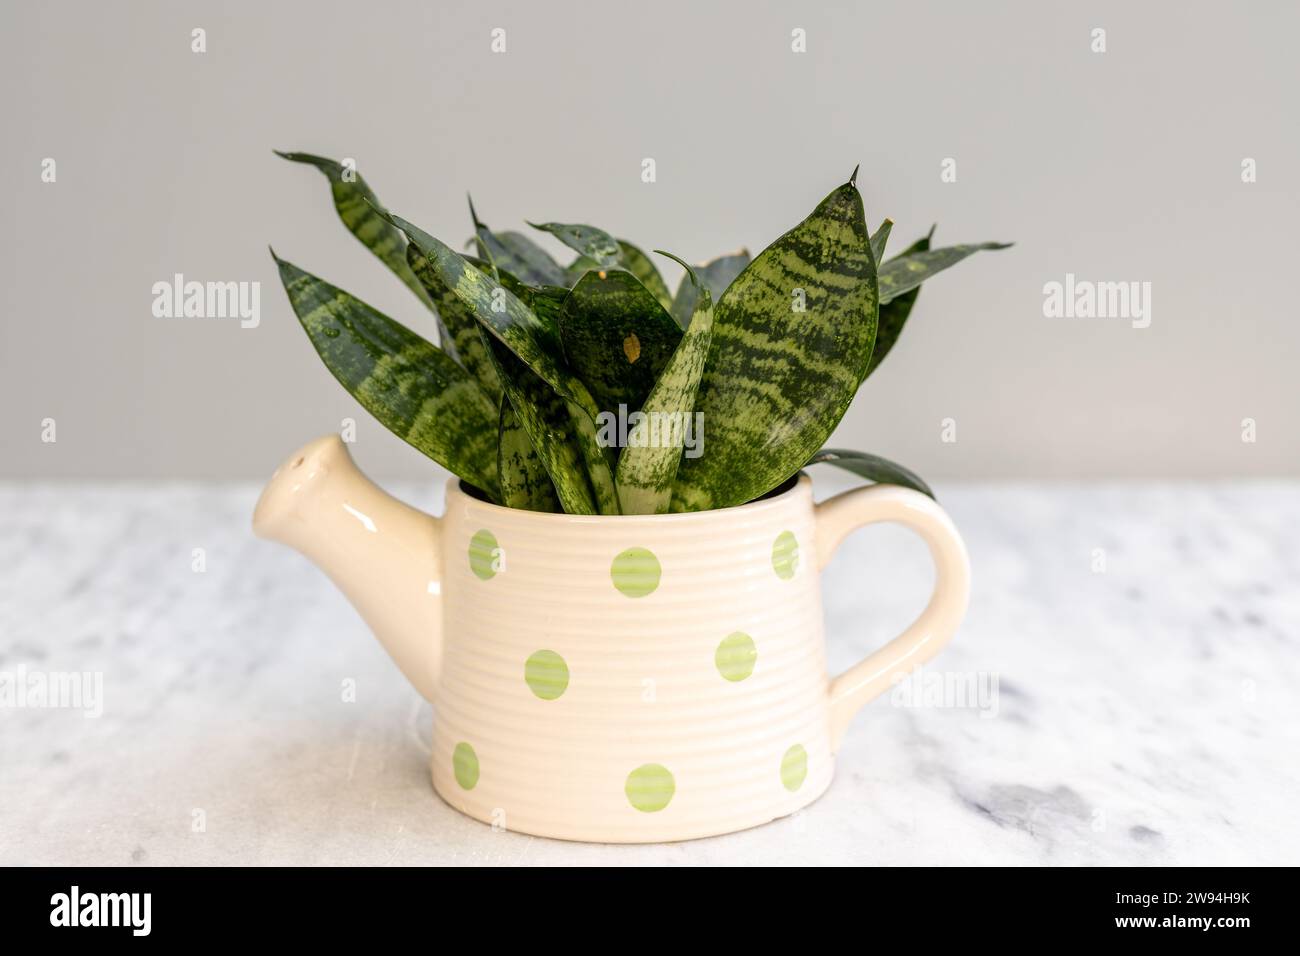 Ornamental indoor snake plant for office desk in a decorative ceramic kettle flowerpot. Stock Photo